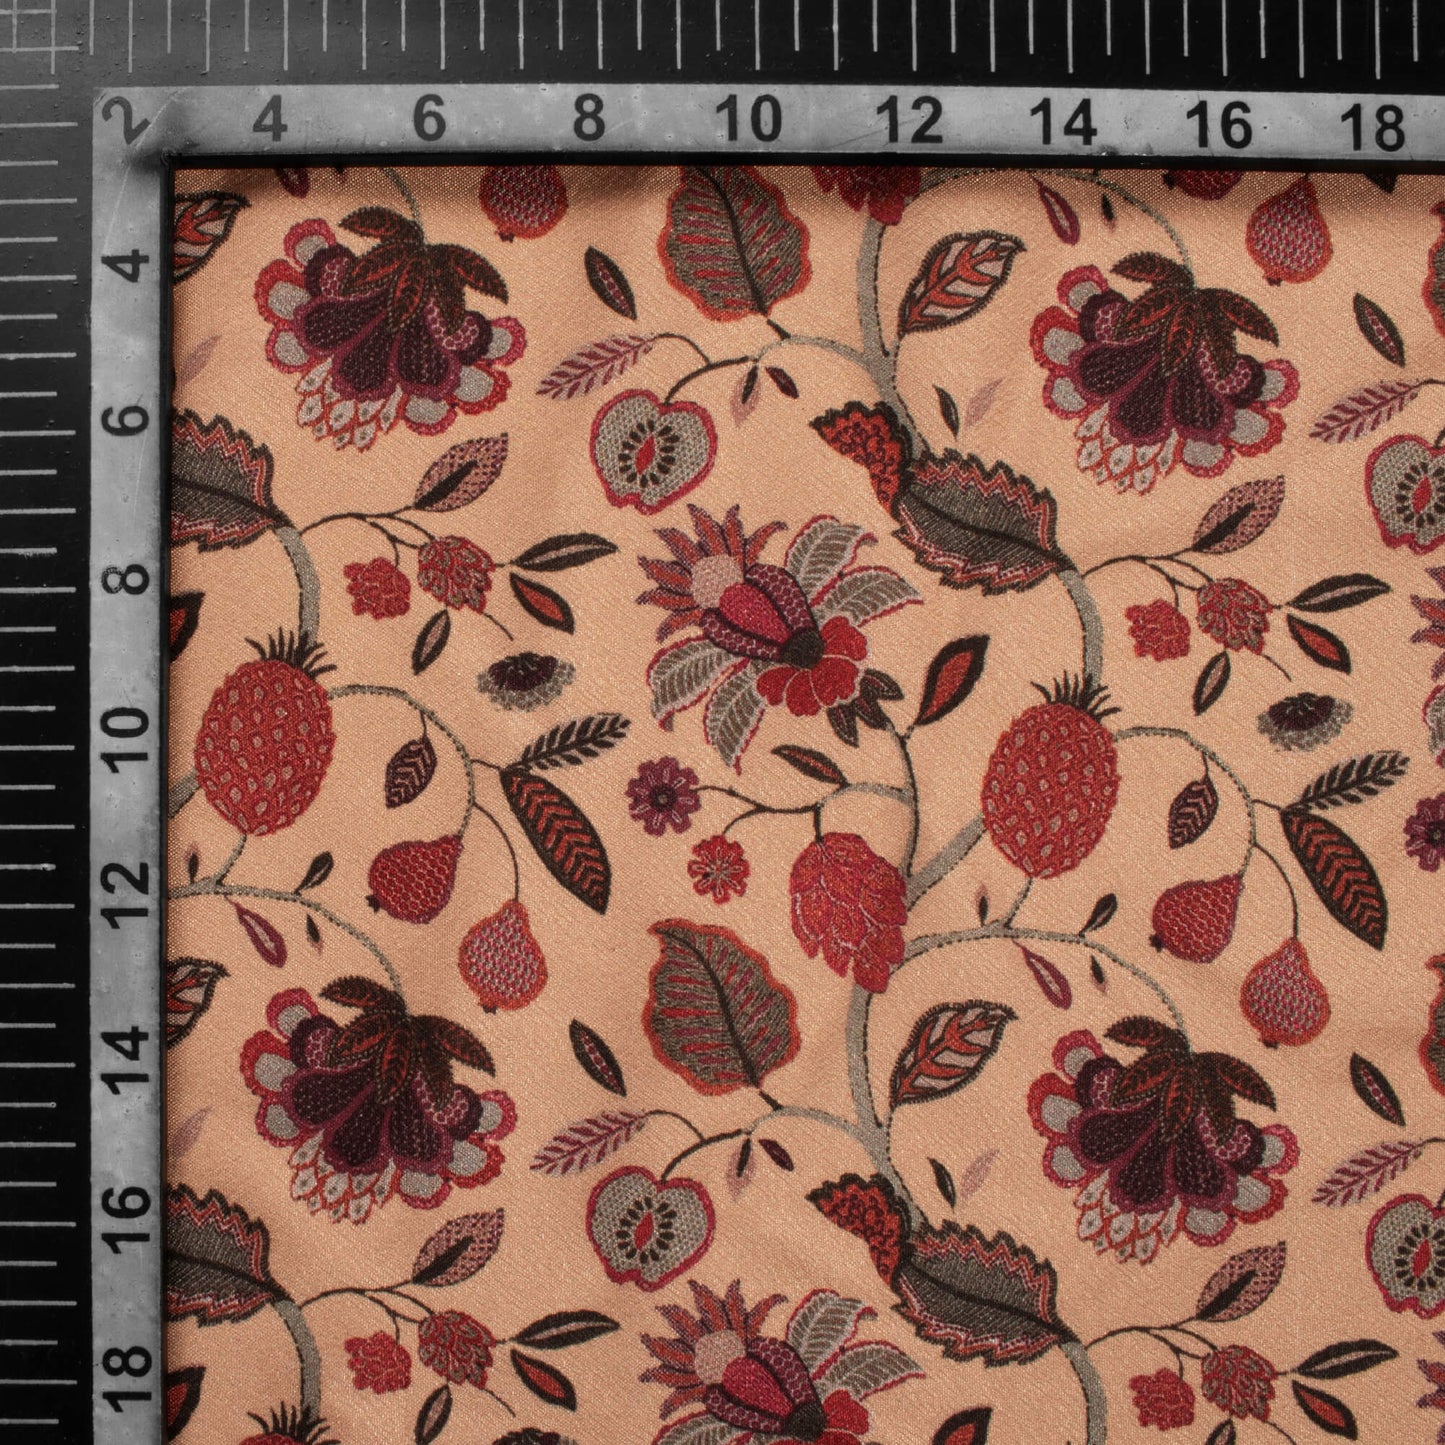 Tan Beige And Maroon Floral Pattern Digital Print Crepe Silk Fabric